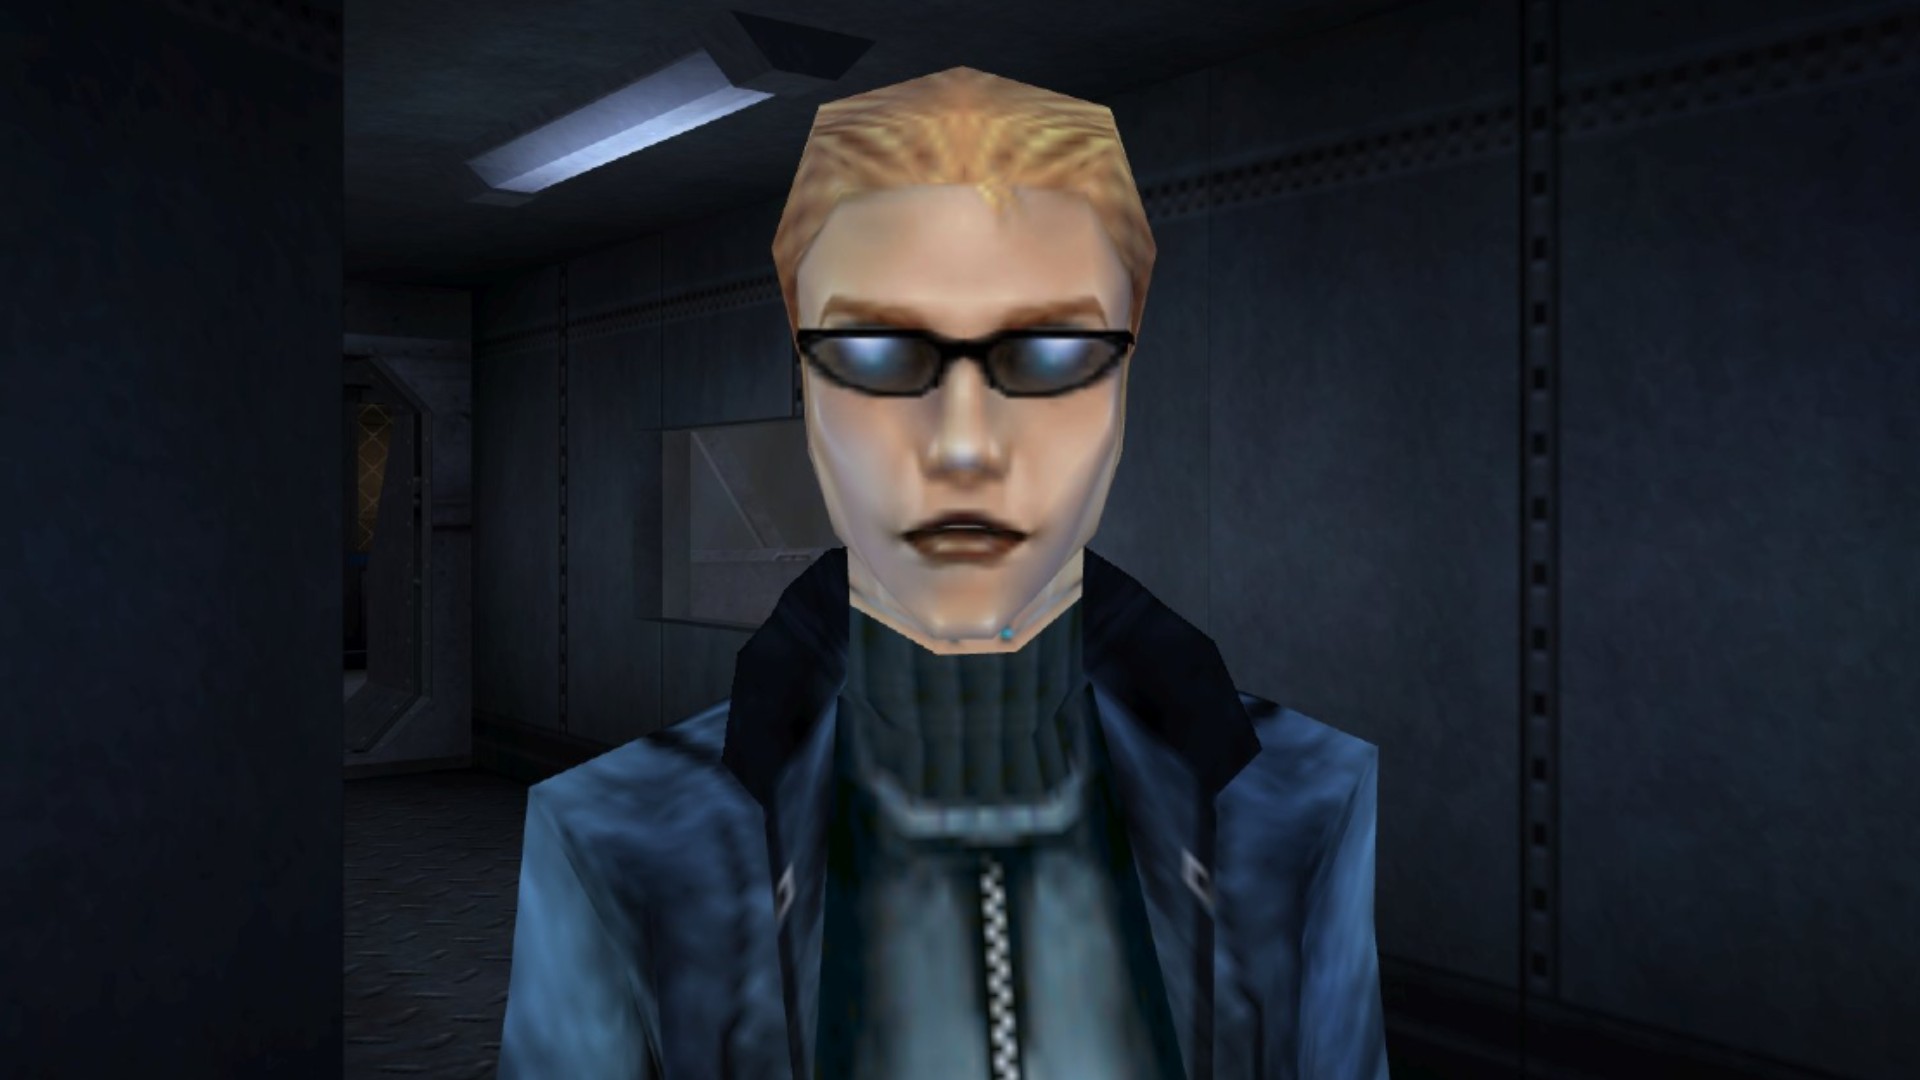  Vast Deus Ex mod restores the original game's vision for a female protagonist 